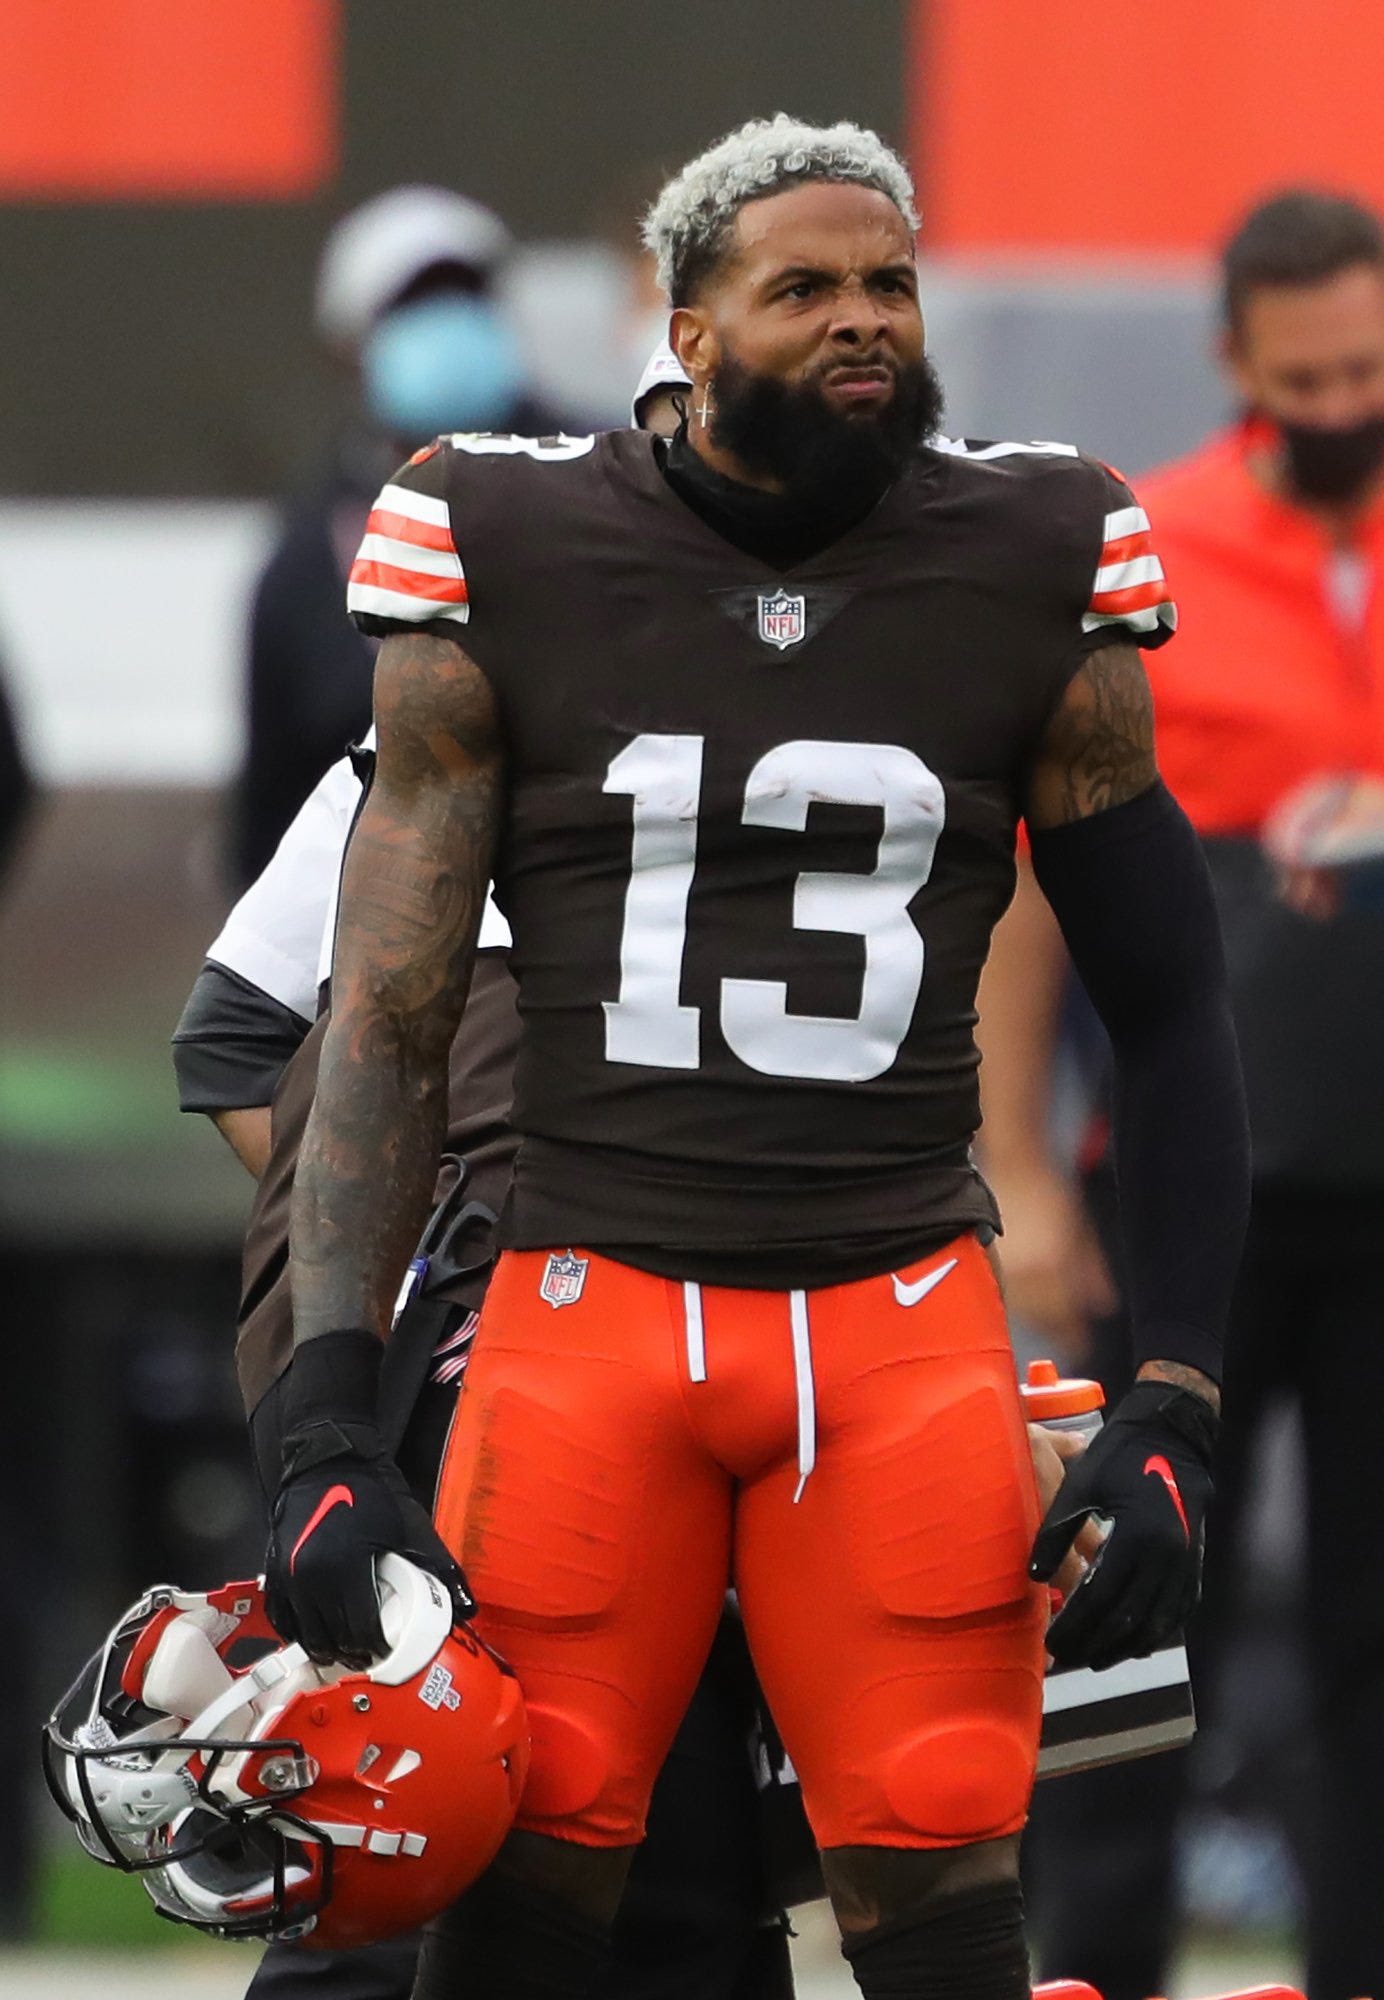 PointsBet Sportsbook on Twitter: What OBJ would look like in Browns jersey